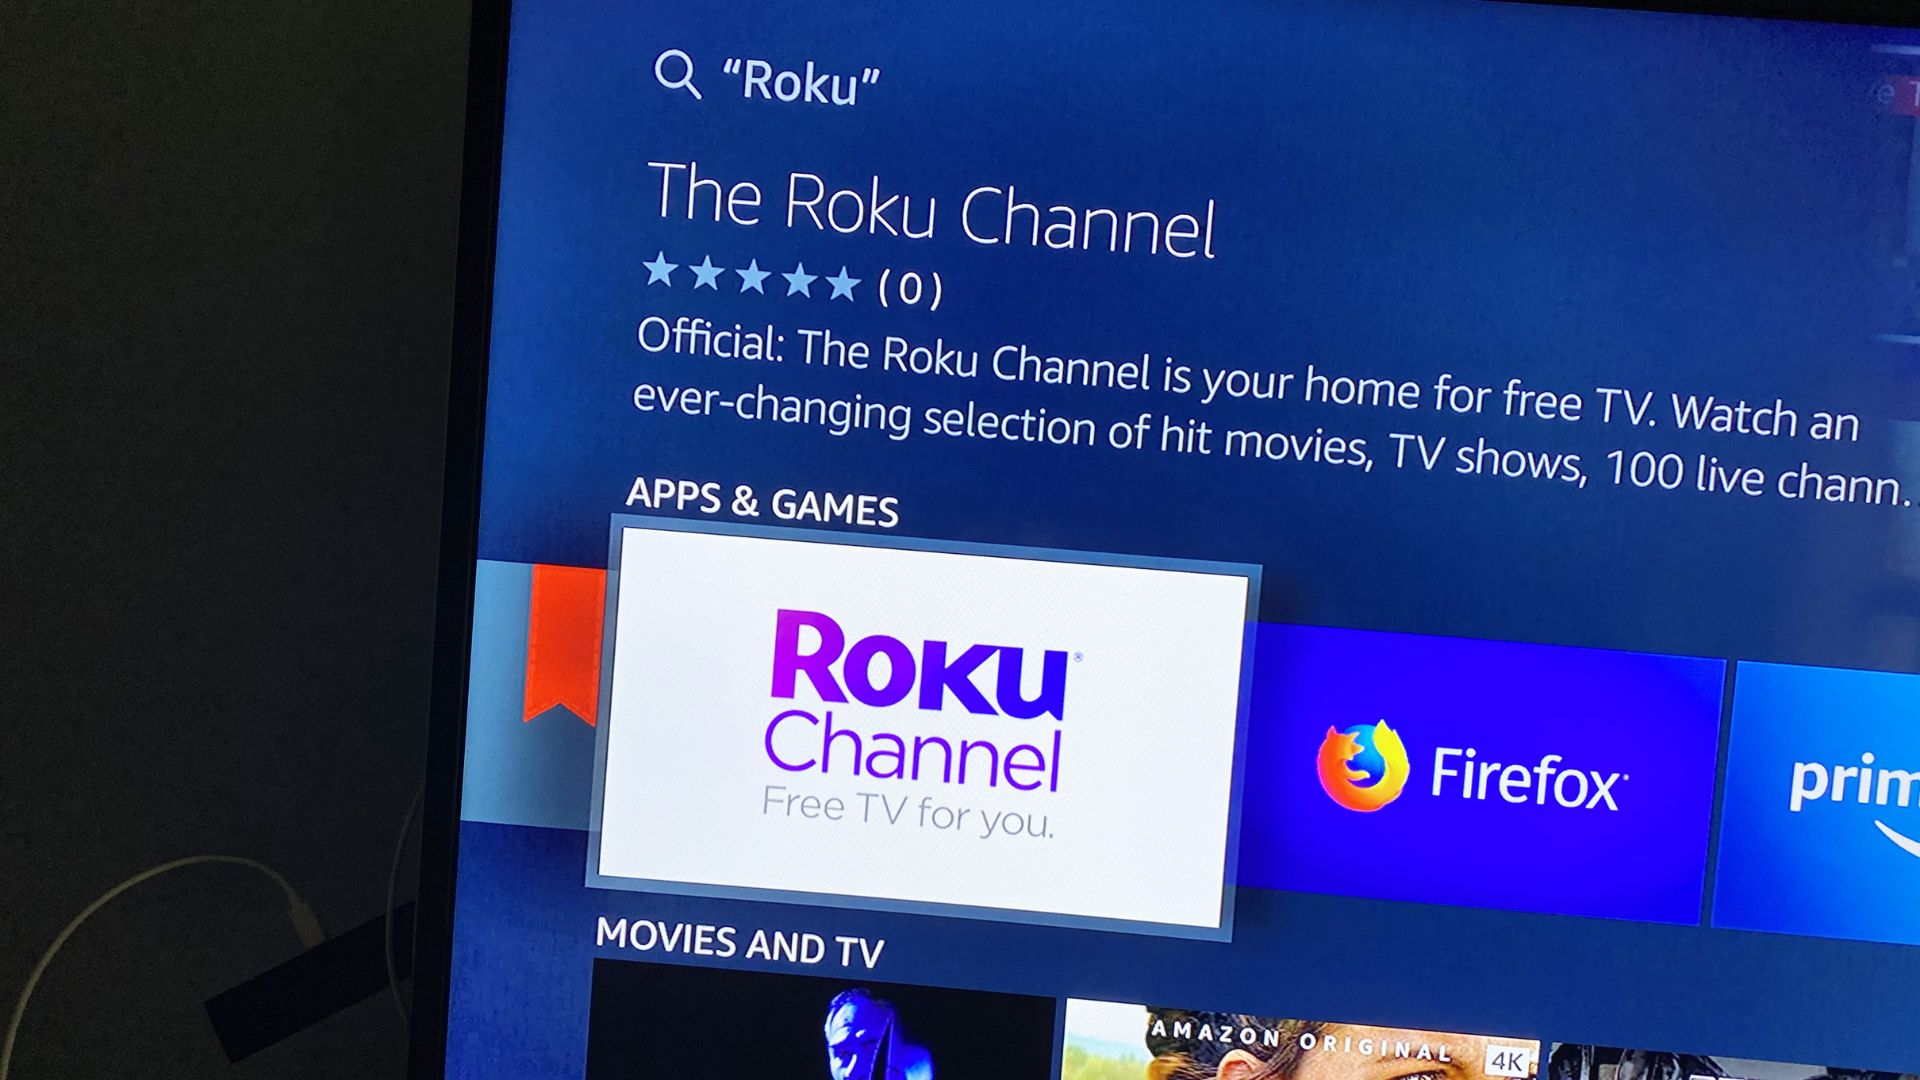 How To Add Roku To Samsung Smart TV